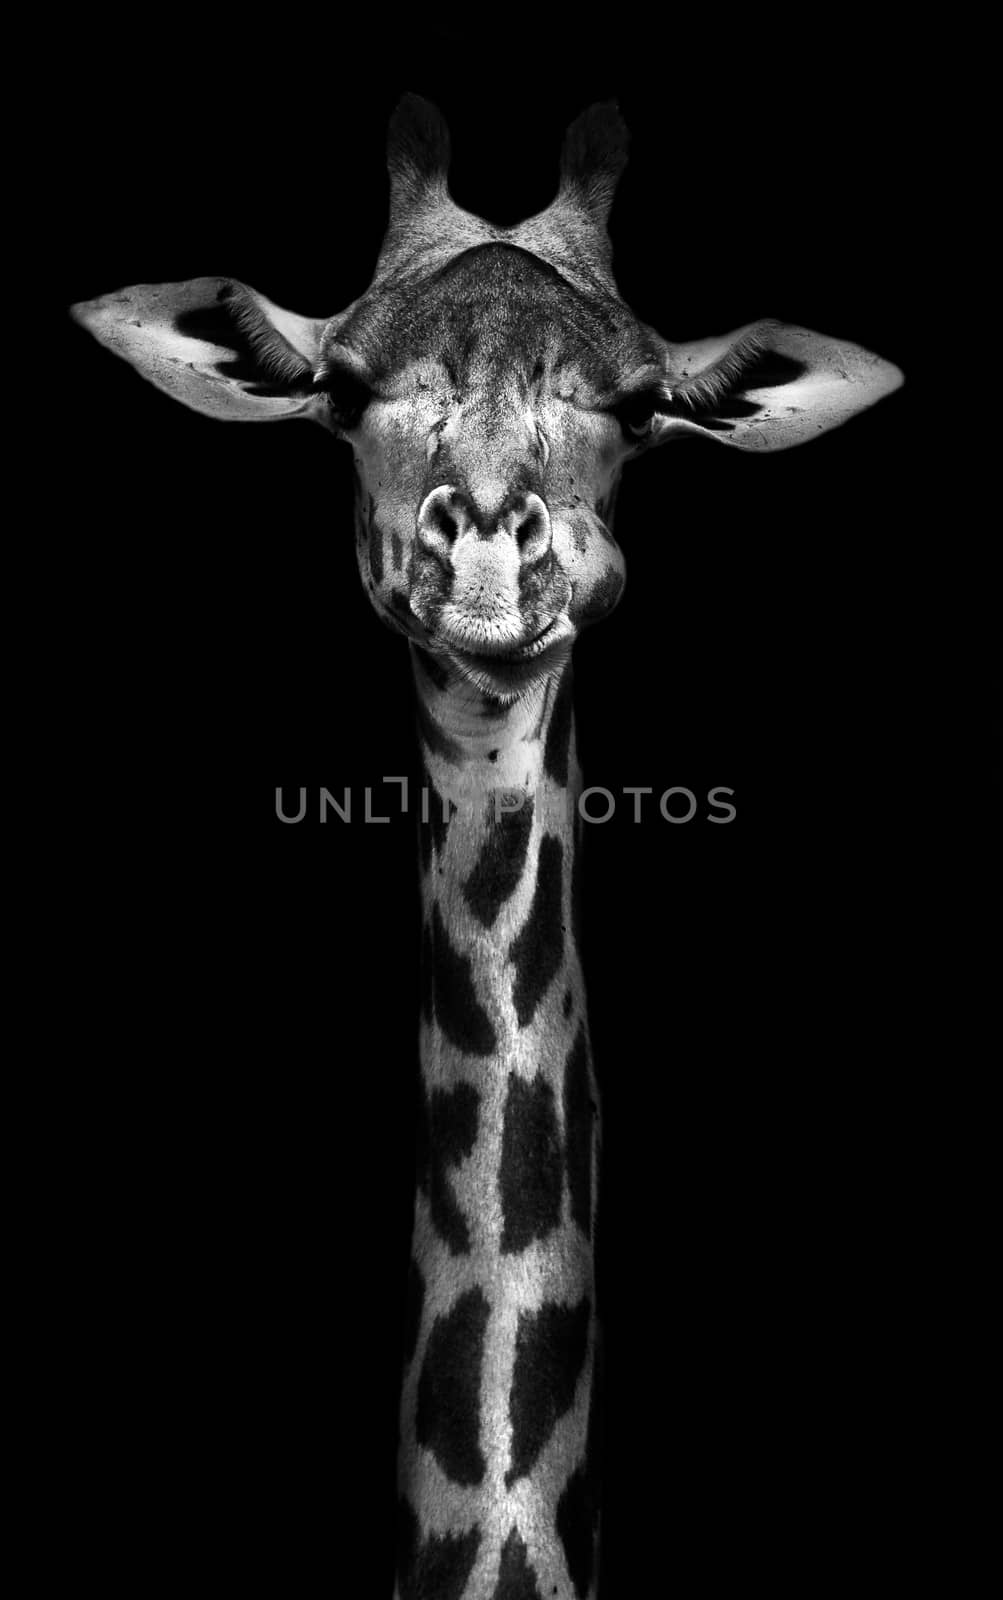 Creative black and whitw image of a thornycroft giraffe